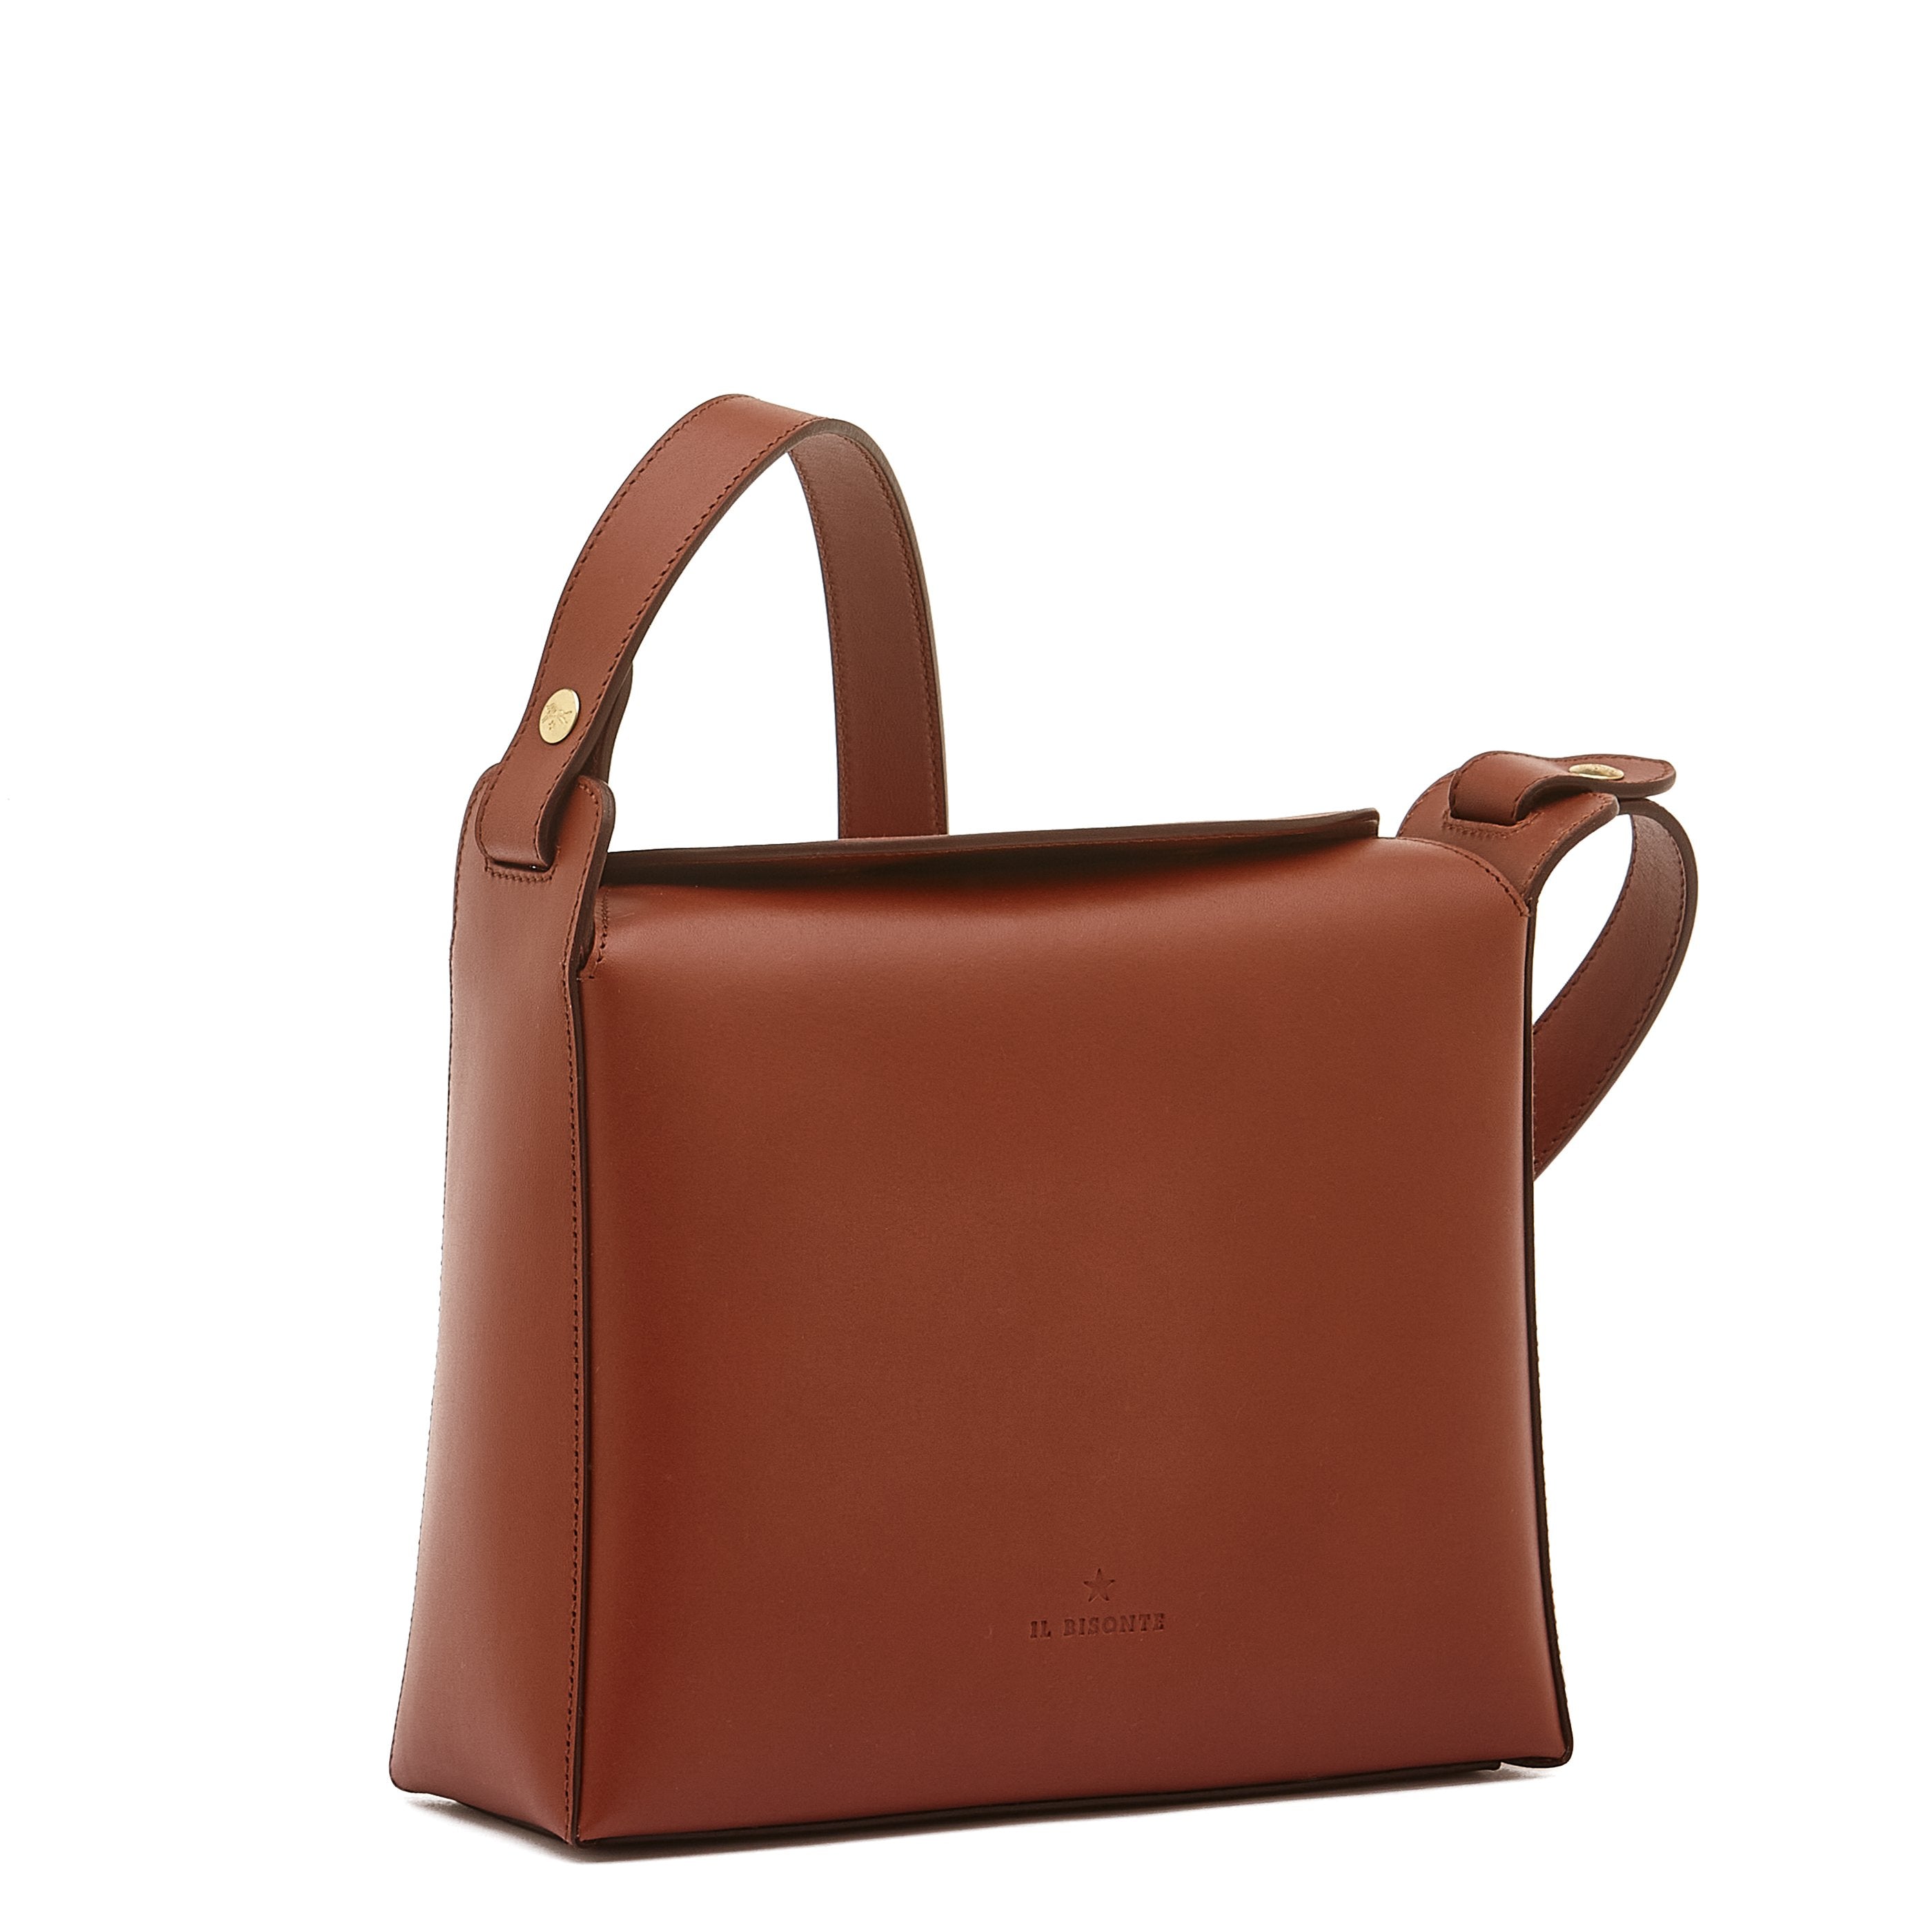 Maggio | Women's shoulder bag in leather color red ruggine